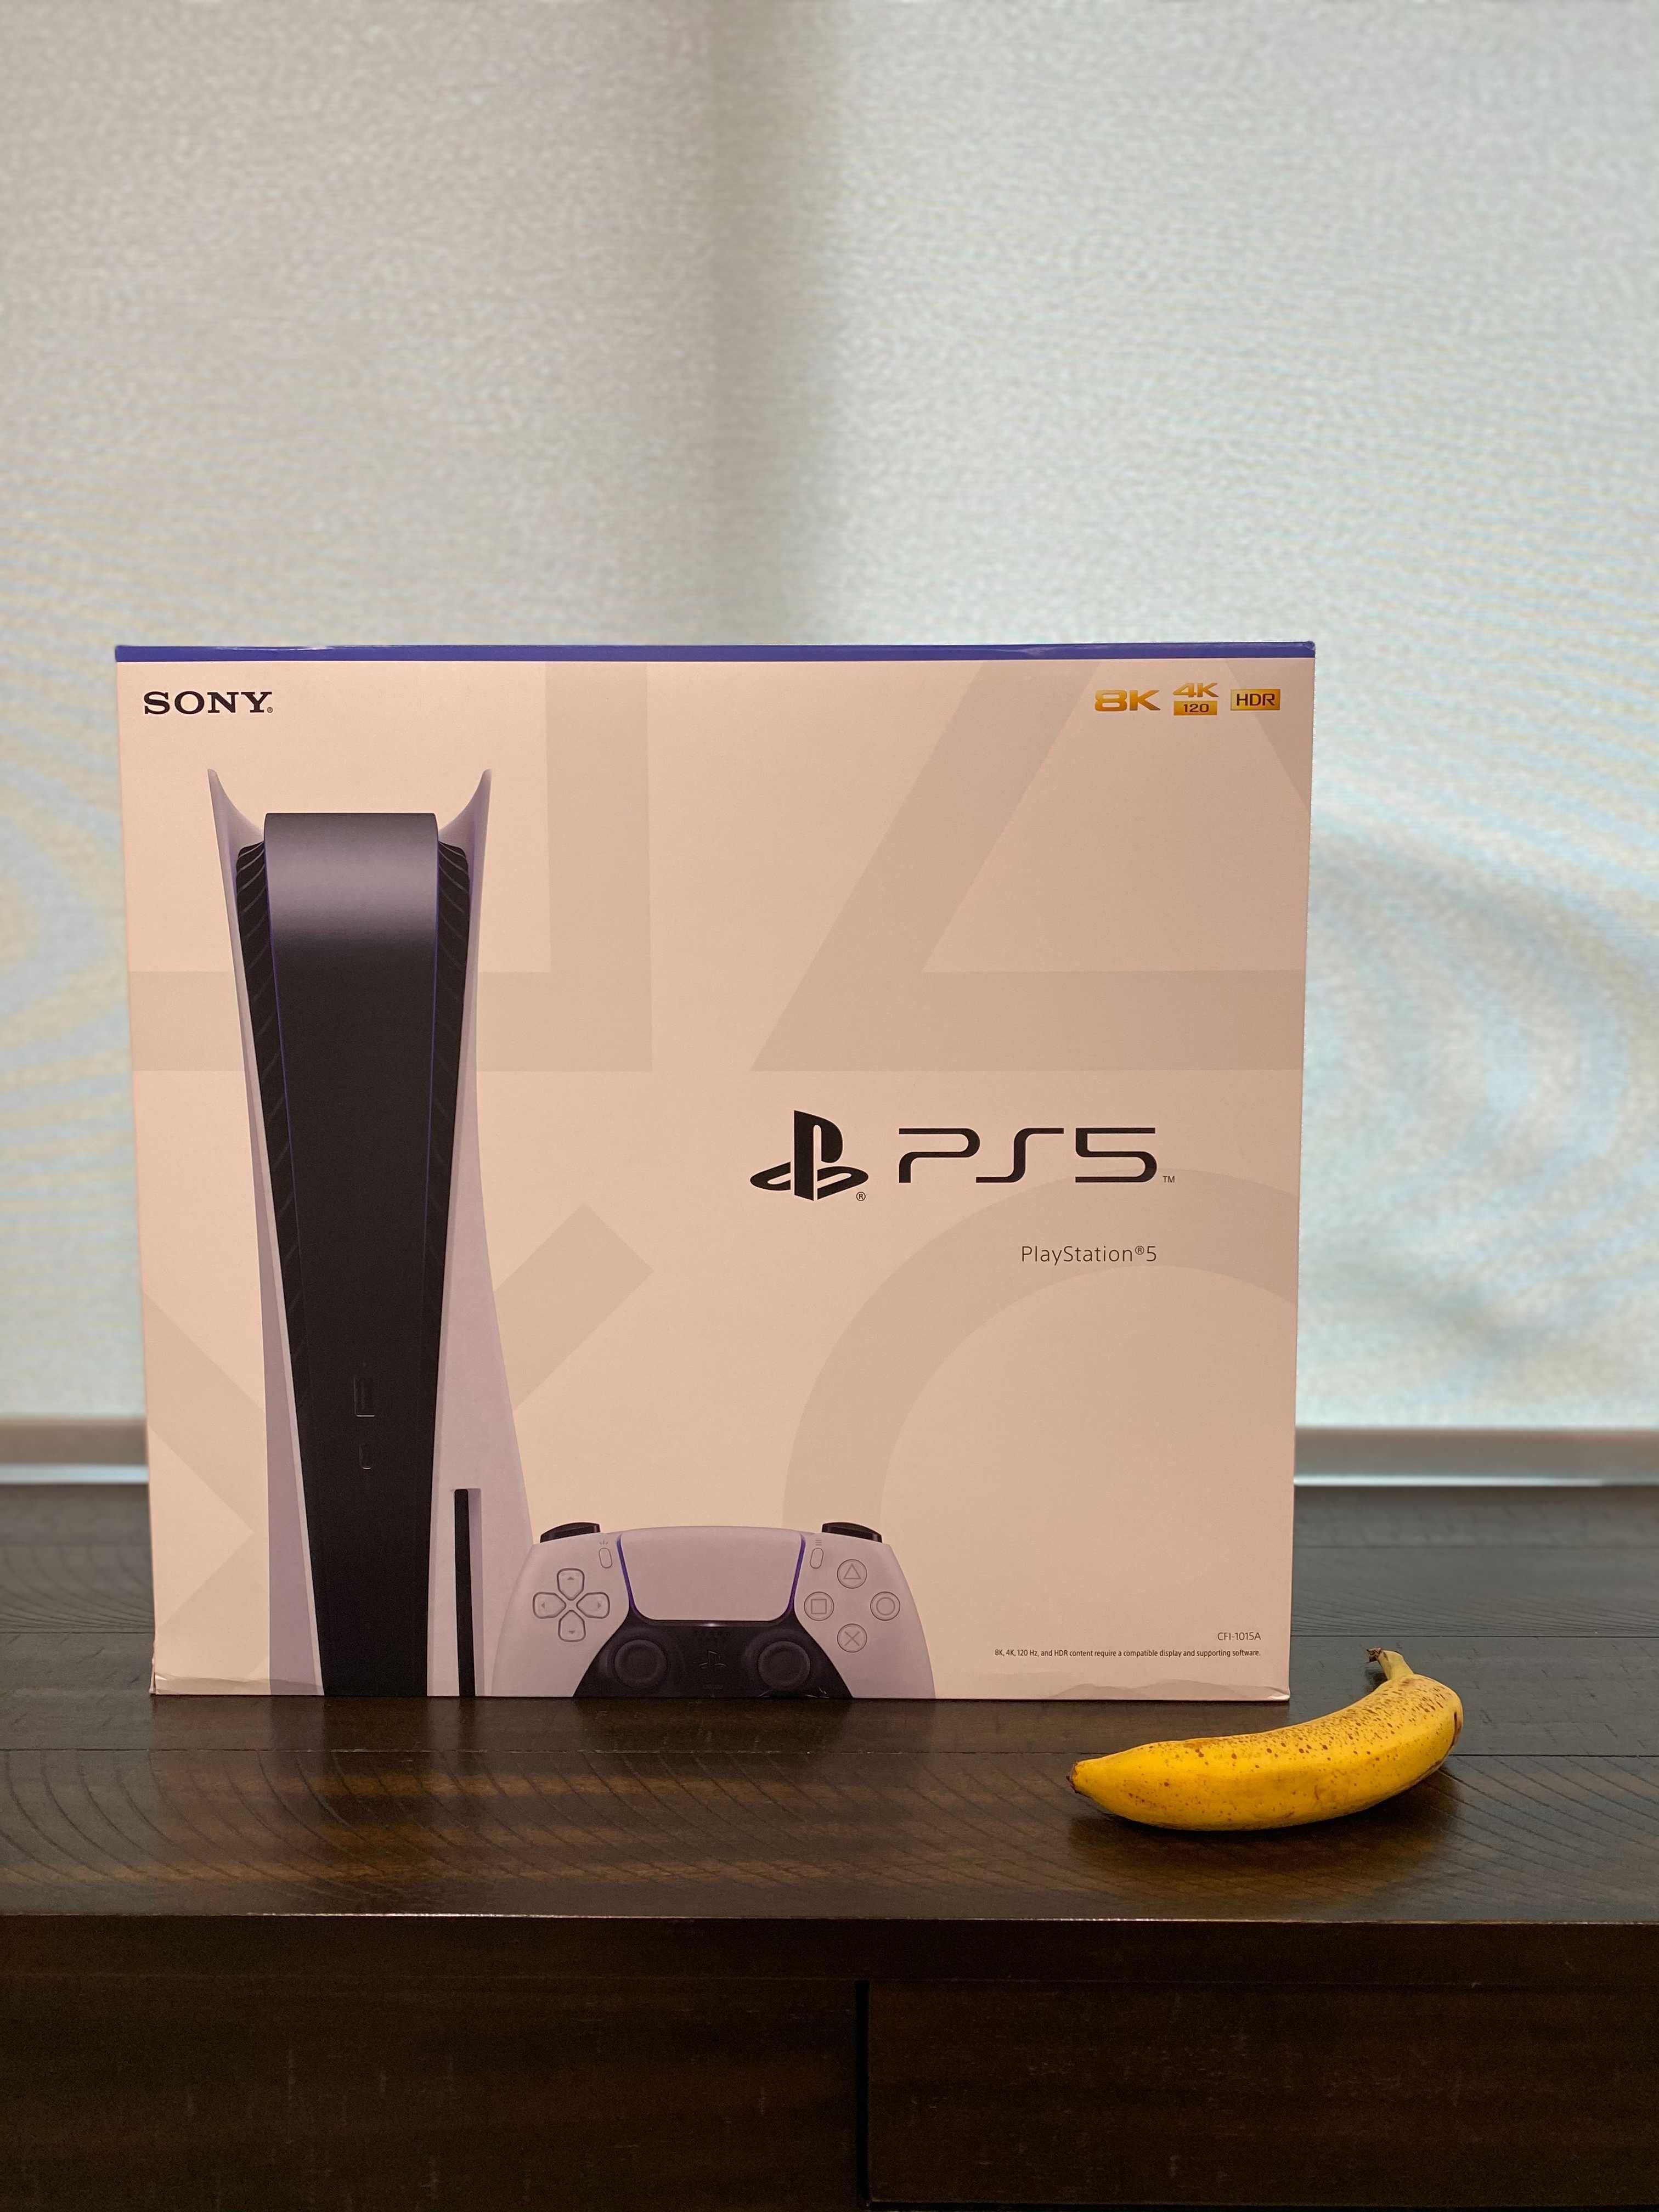 PlayStation 5 и банан.
Источник: IGN